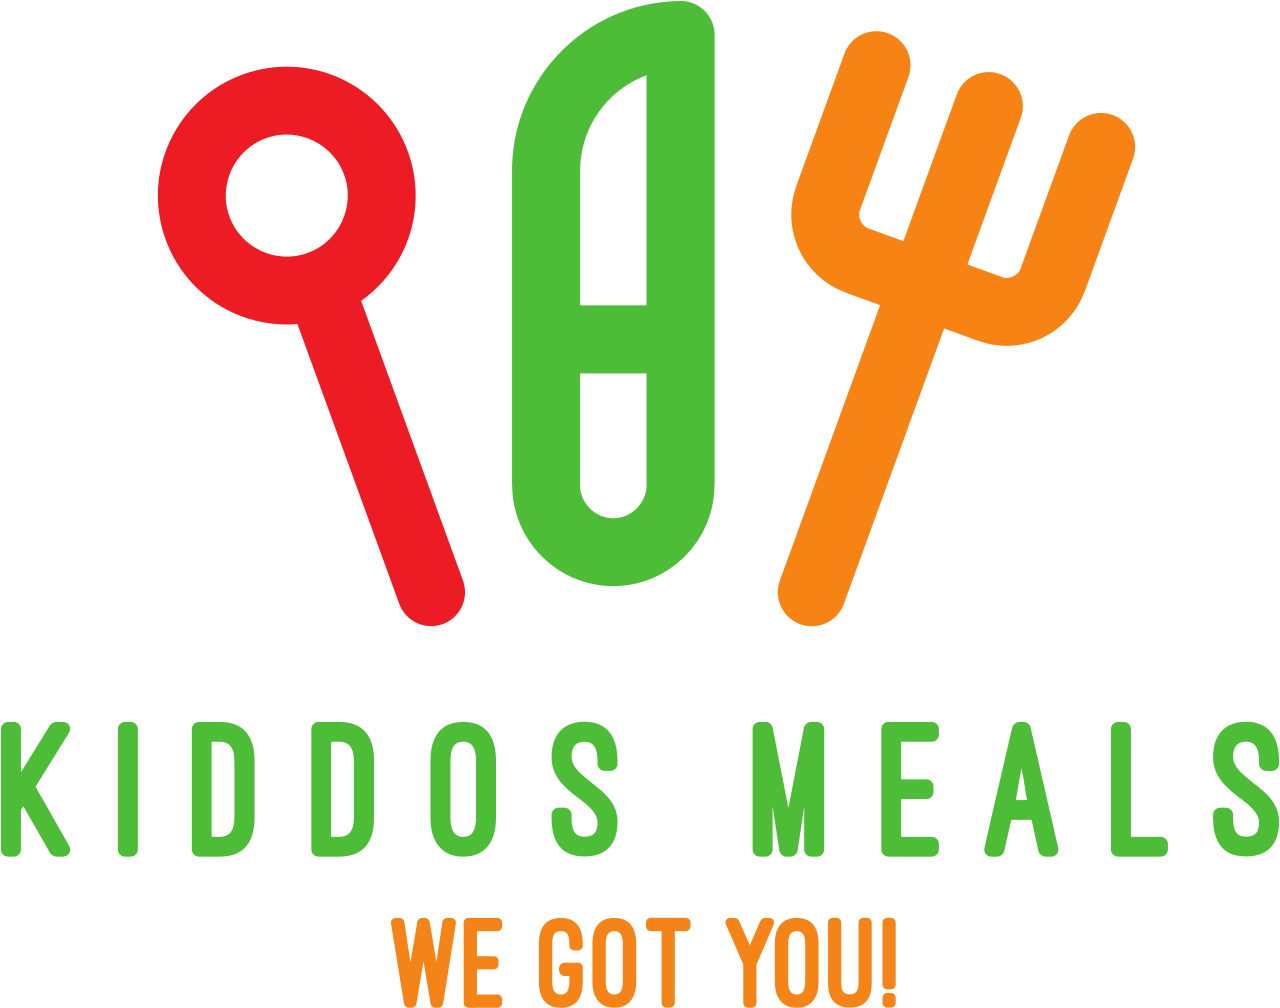 Kiddos meals's logo